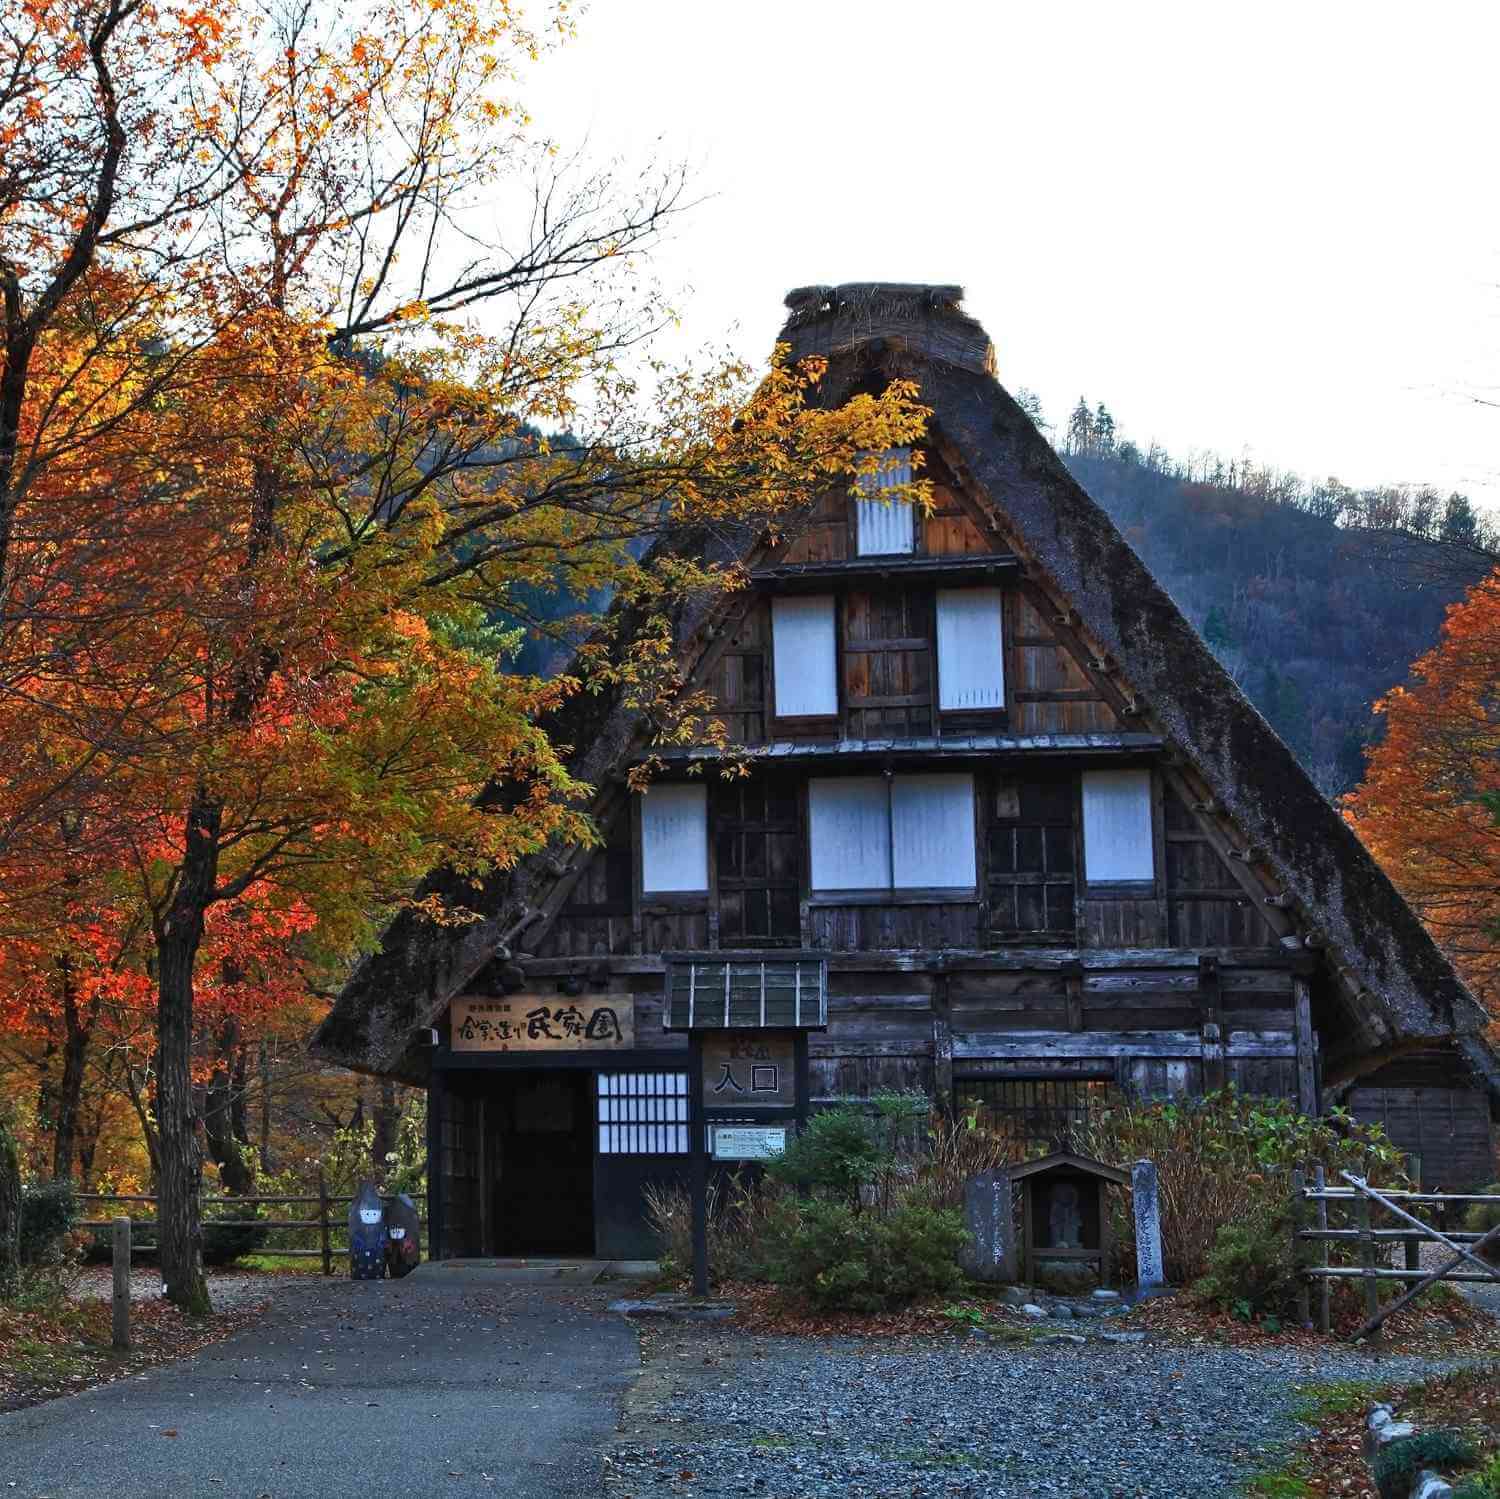 Shirakawago in autumn = Shutterstock 2